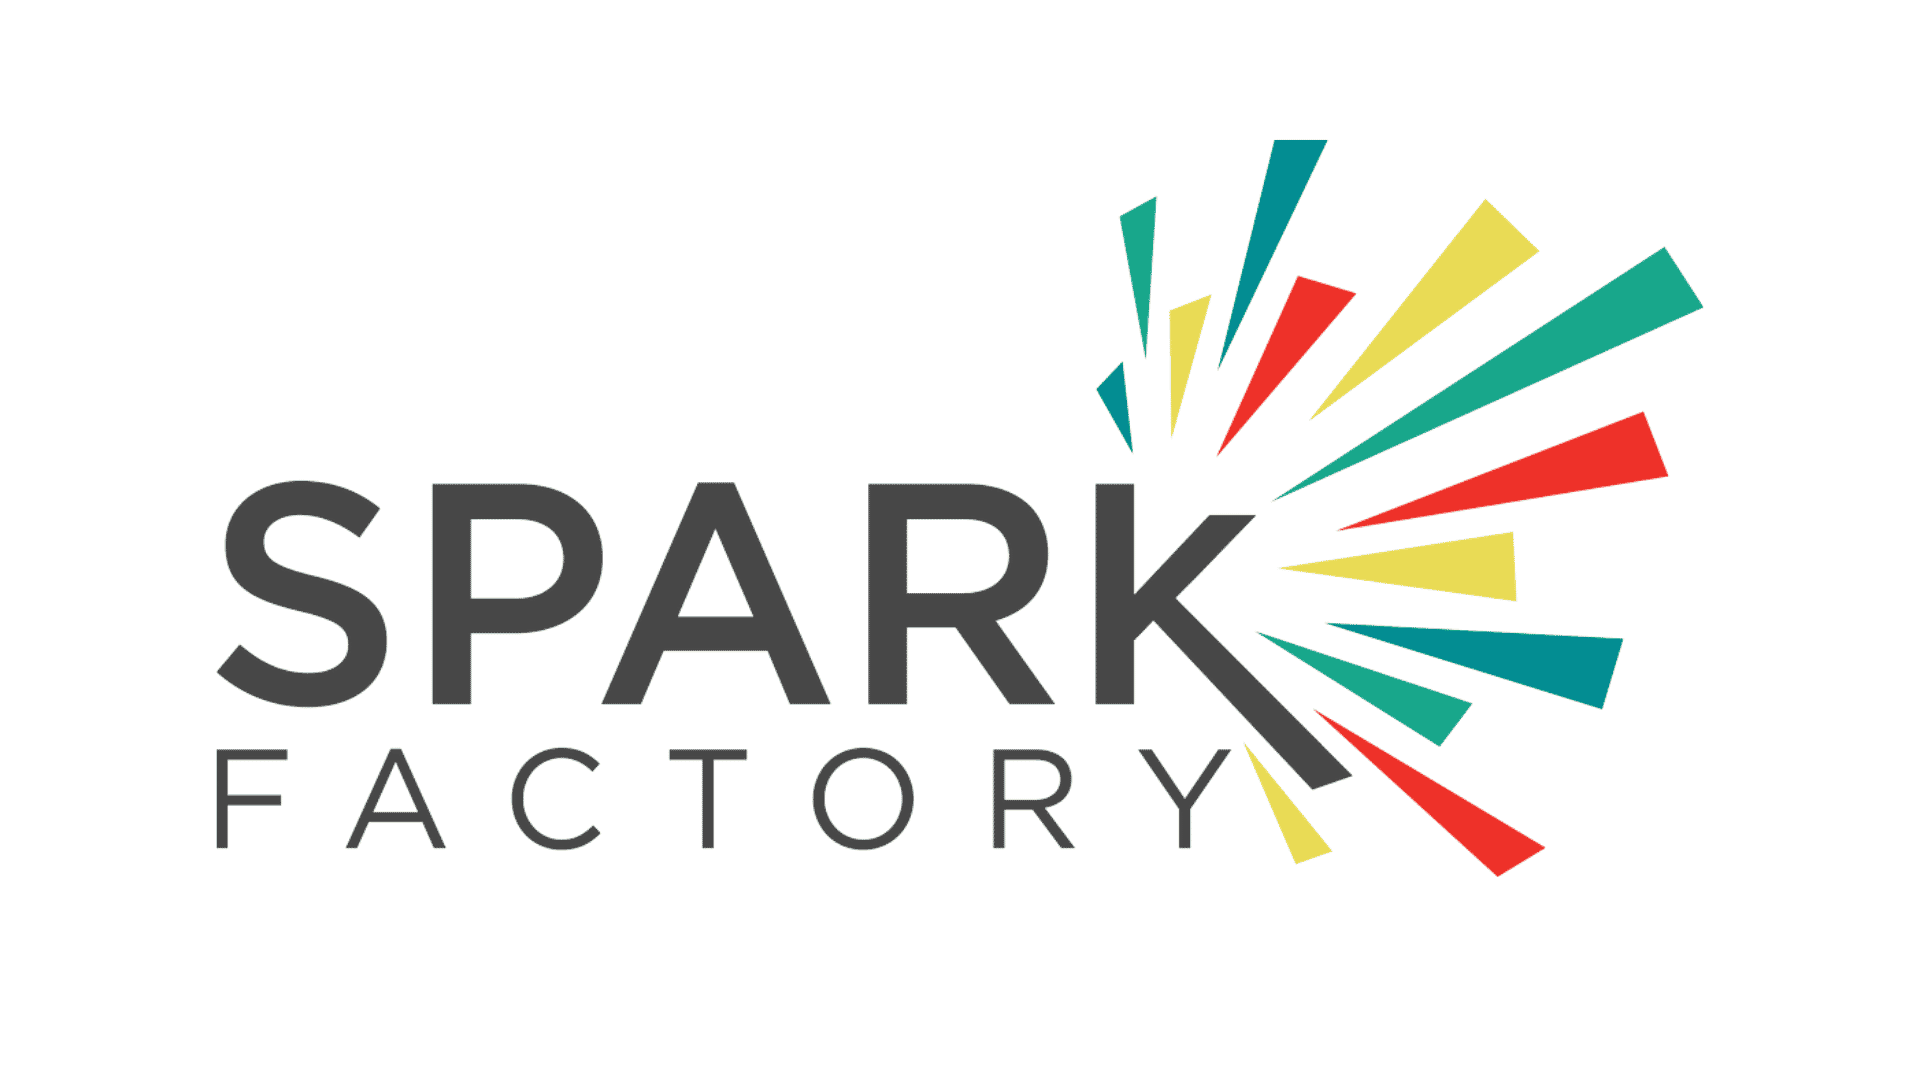 Spark Factory virtual pitch event logo